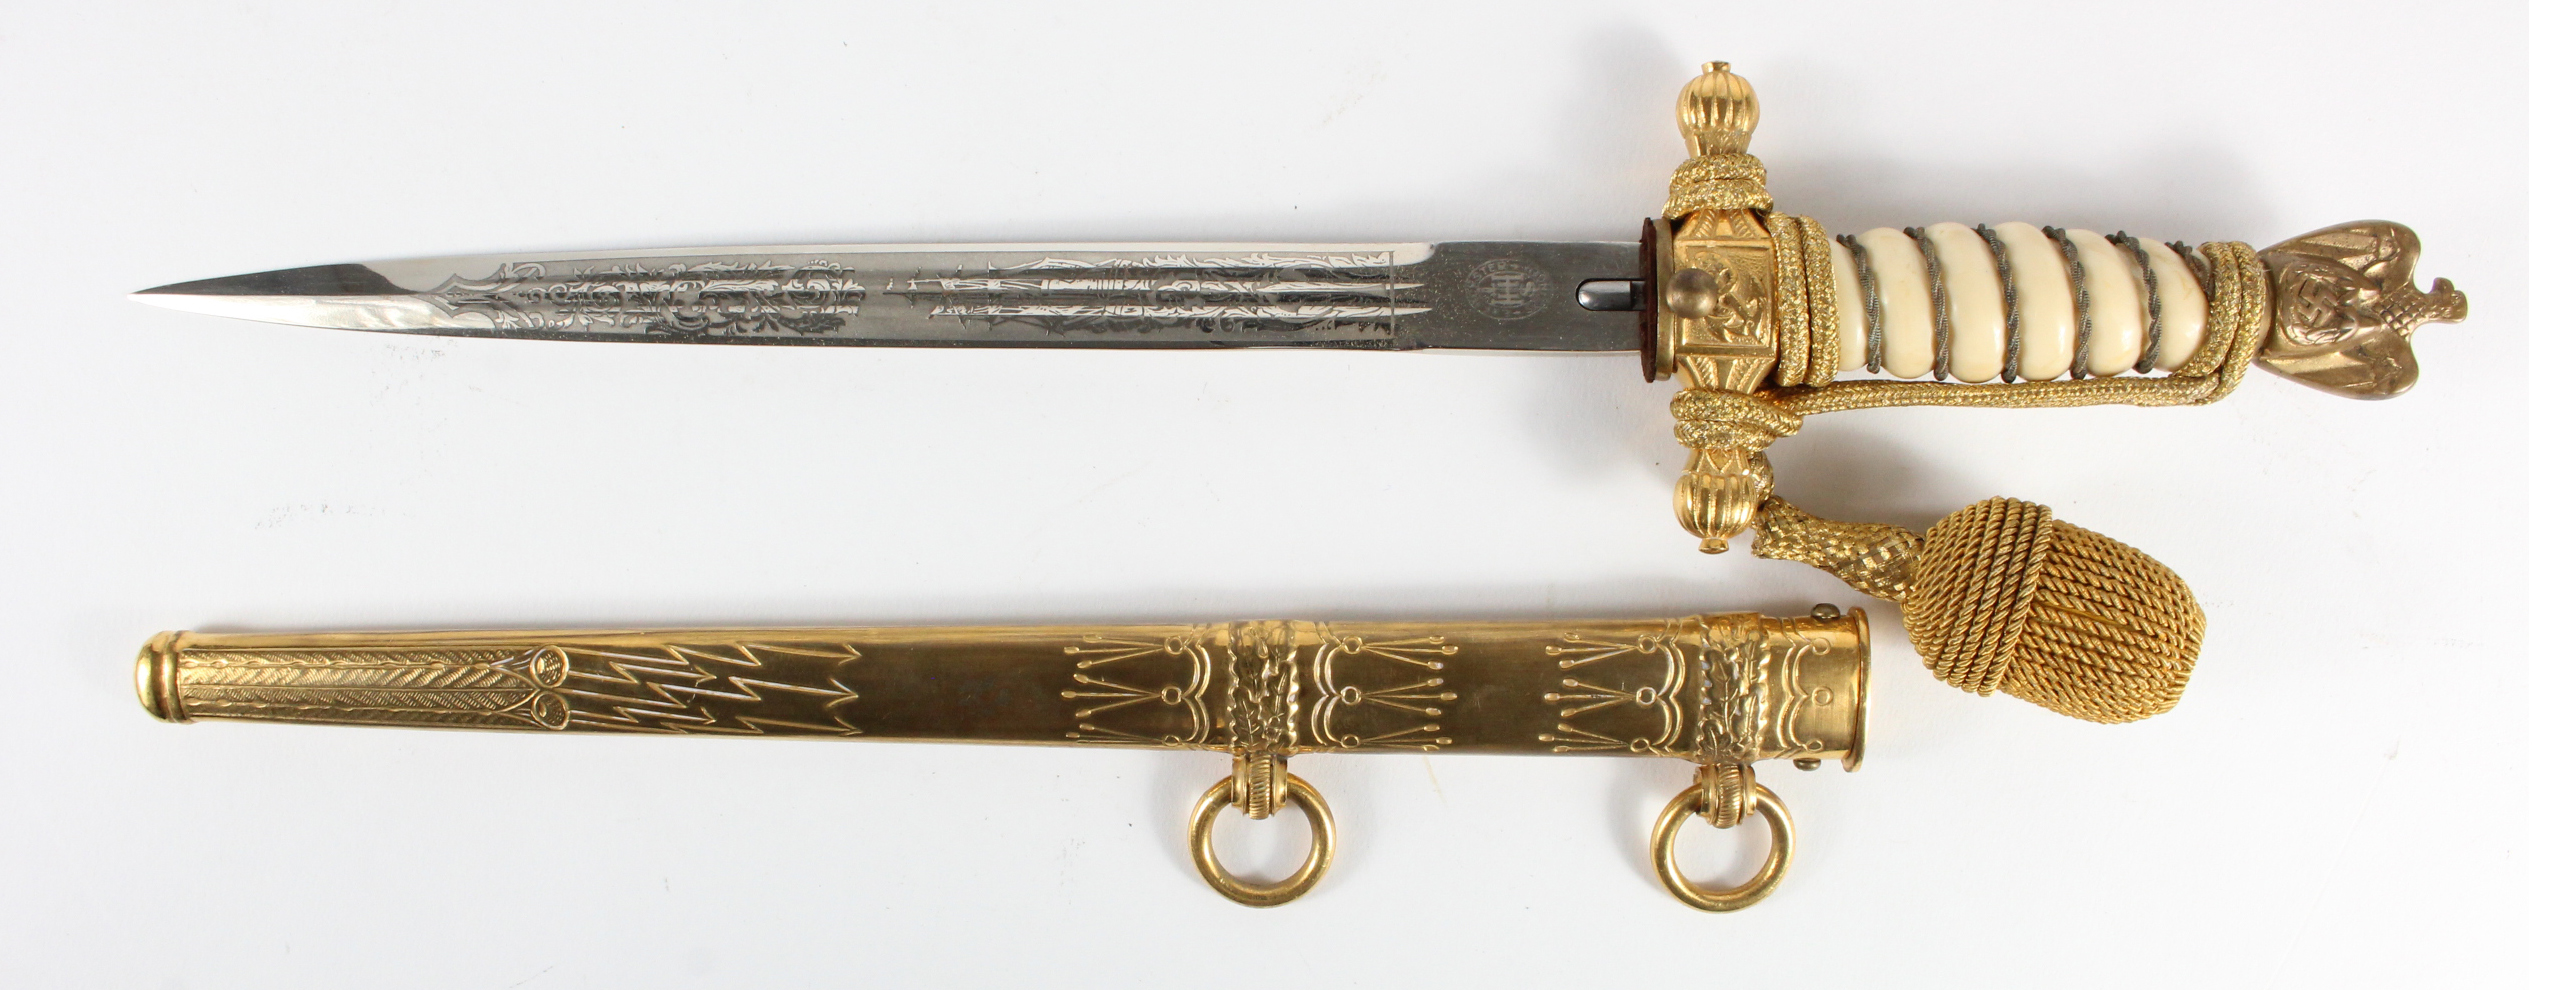 German Kriegsmarine Naval Officers dagger, most gilding intact, high quality piece, matching